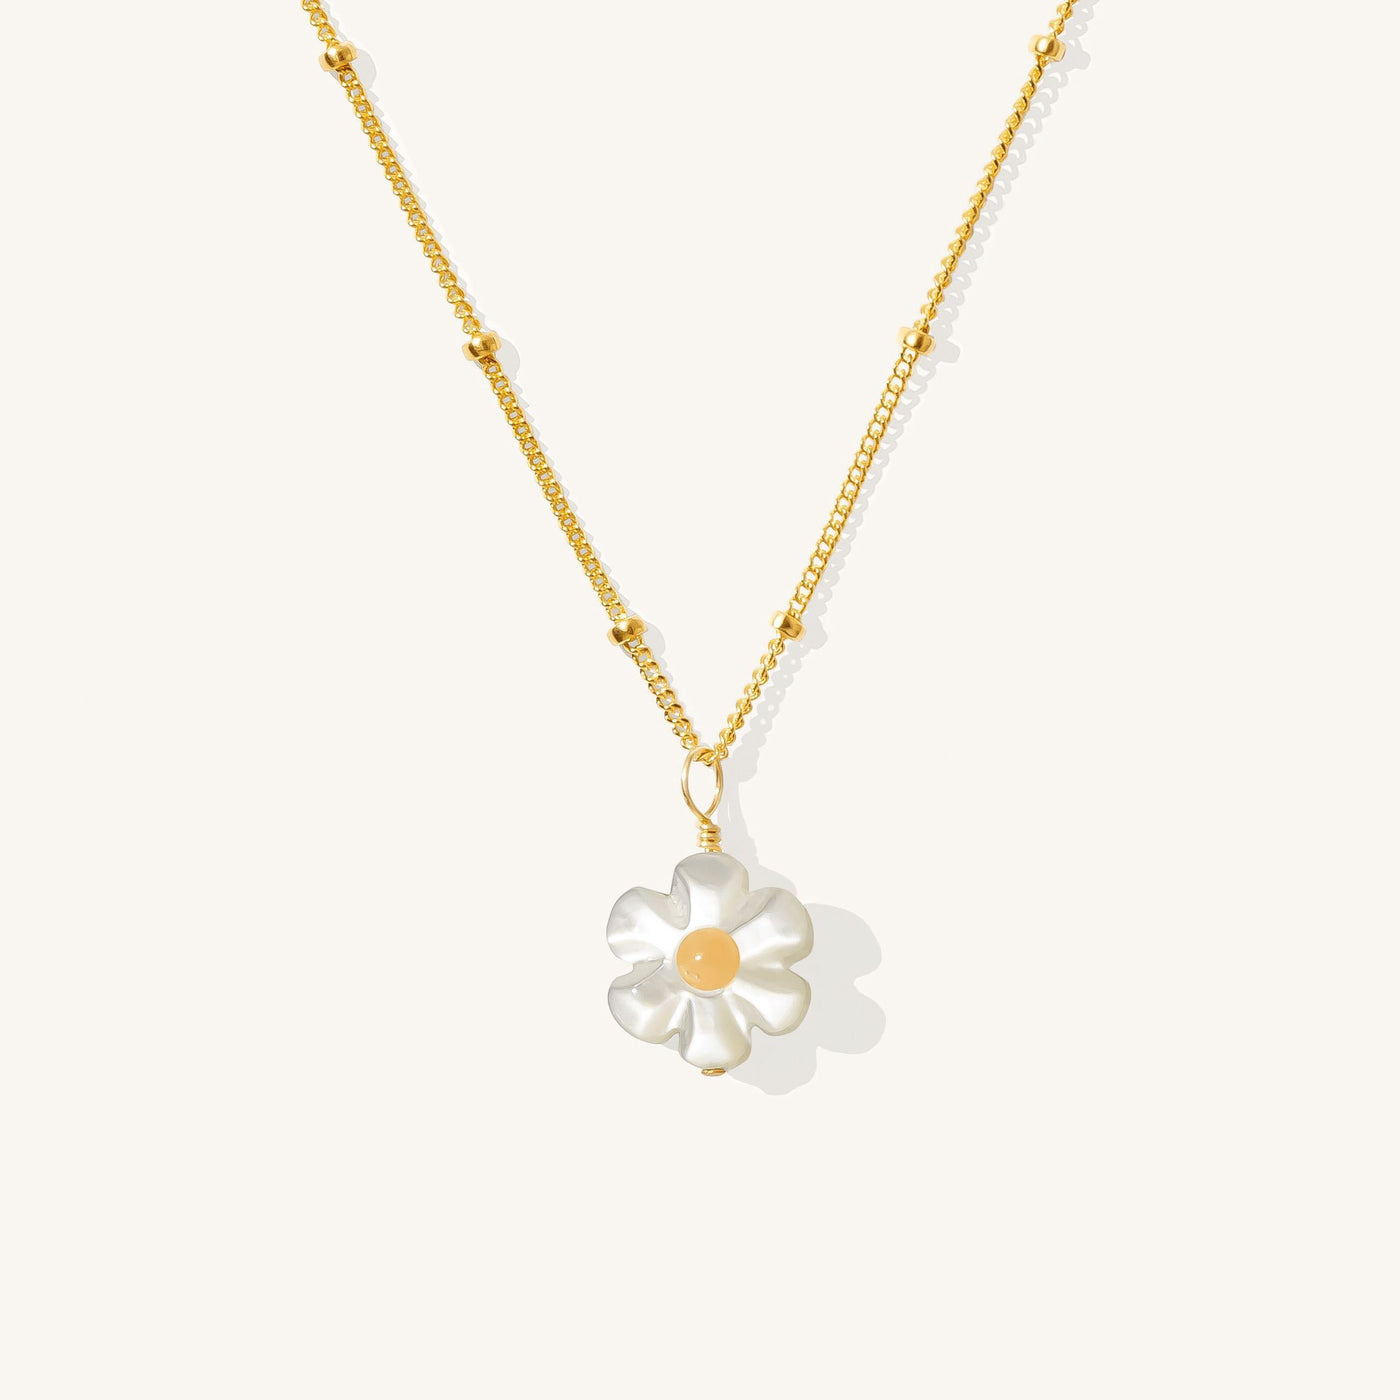 Daisy Necklace | Simple & Dainty Jewelry